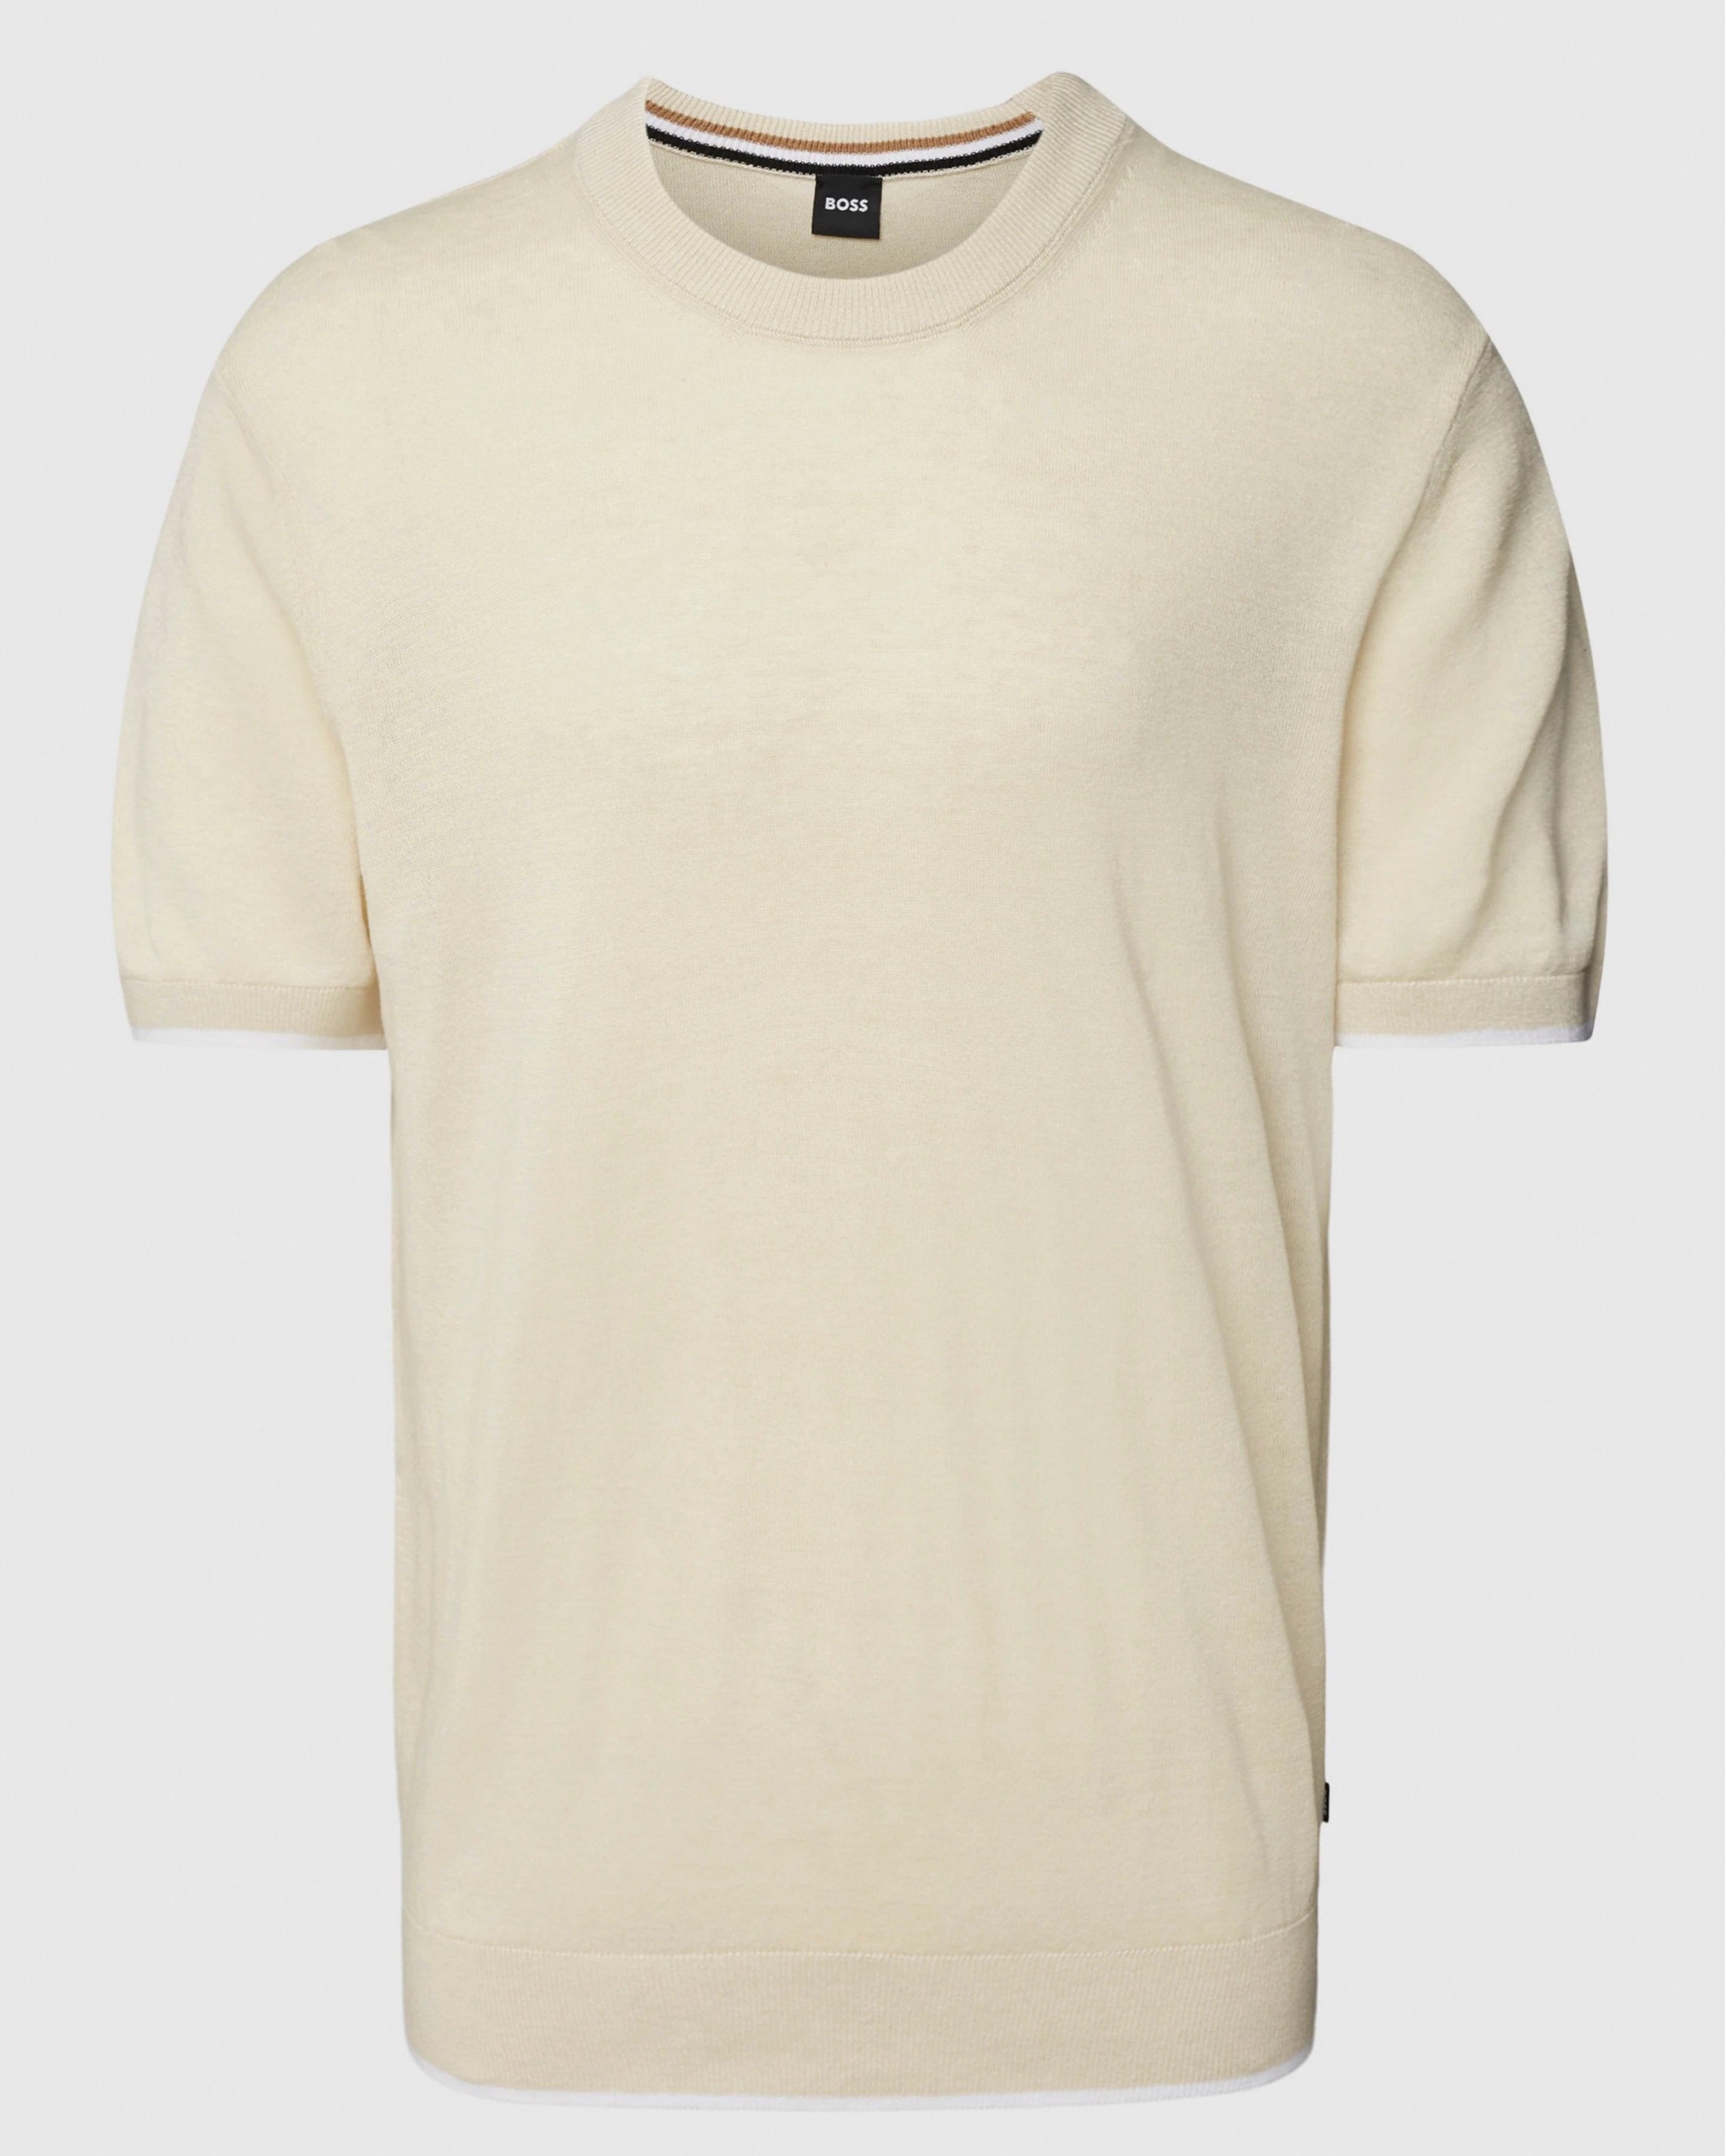 BOSS - GIACCO Open White Linen Blend Knitted T-Shirt 50486728 131